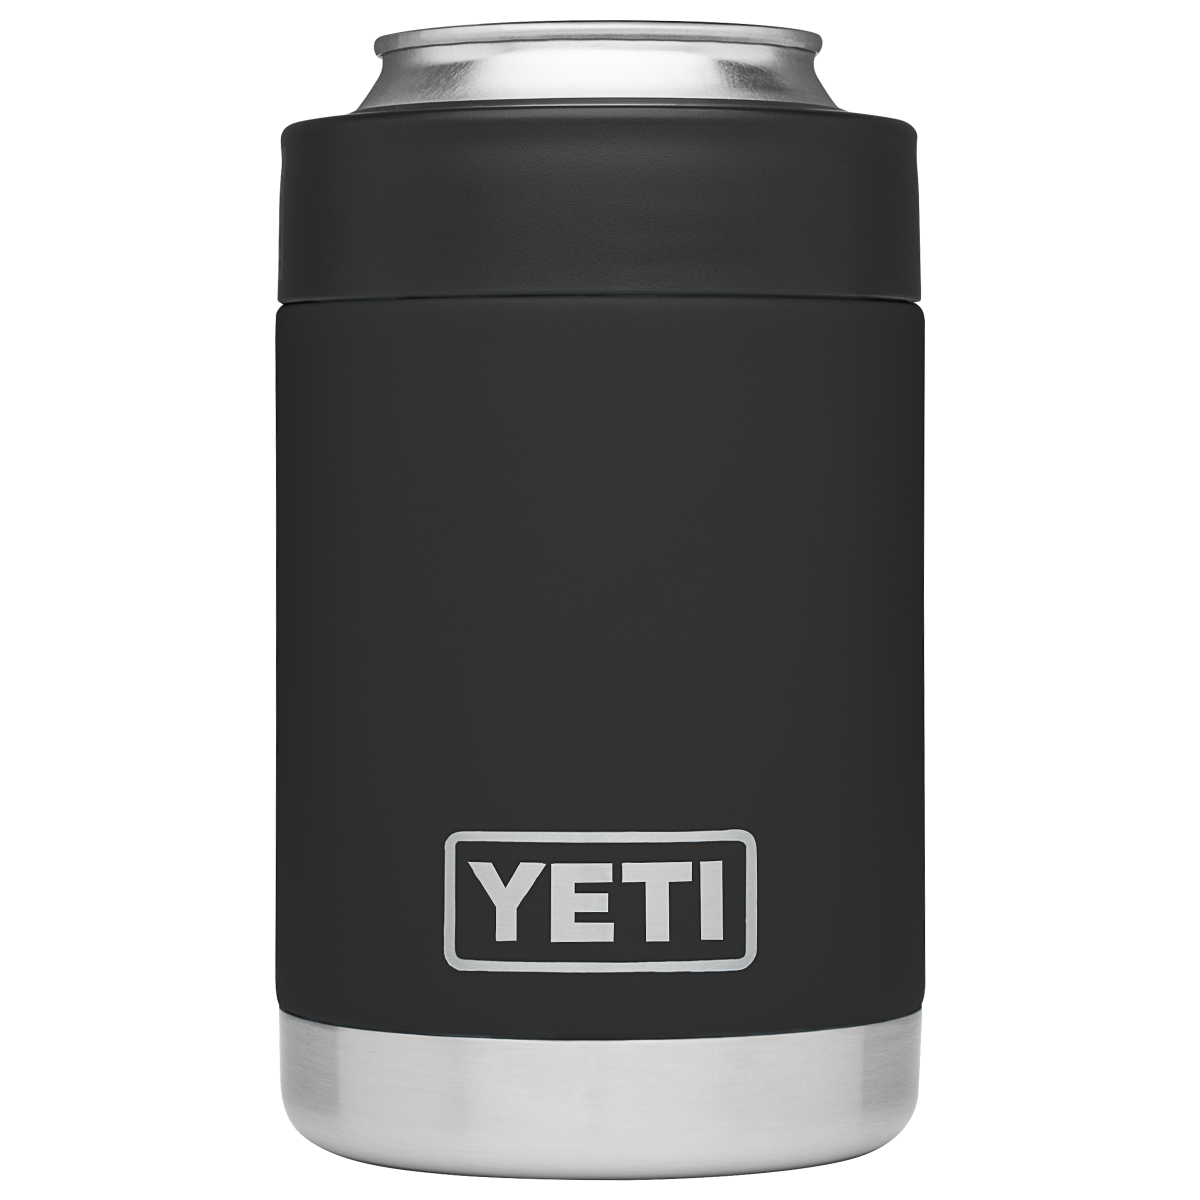 Yeti Rambler Colster Can Cooler - 12 oz - Black